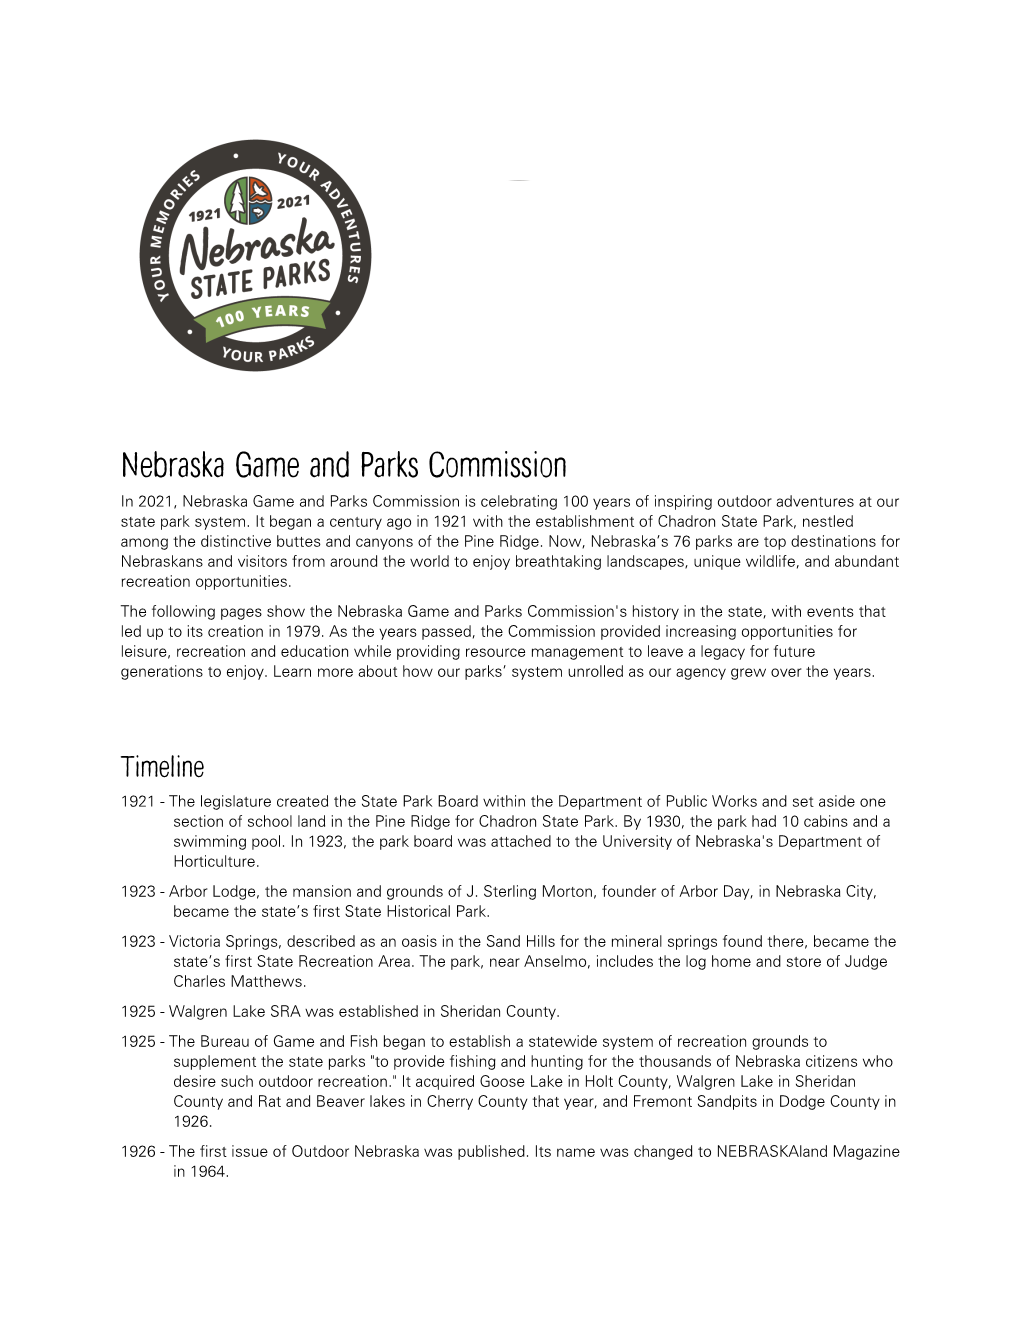 Nebraska Game and Parks Commission in 2021, Nebraska Game and Parks Commission Is Celebrating 100 Years of Inspiring Outdoor Adventures at Our State Park System